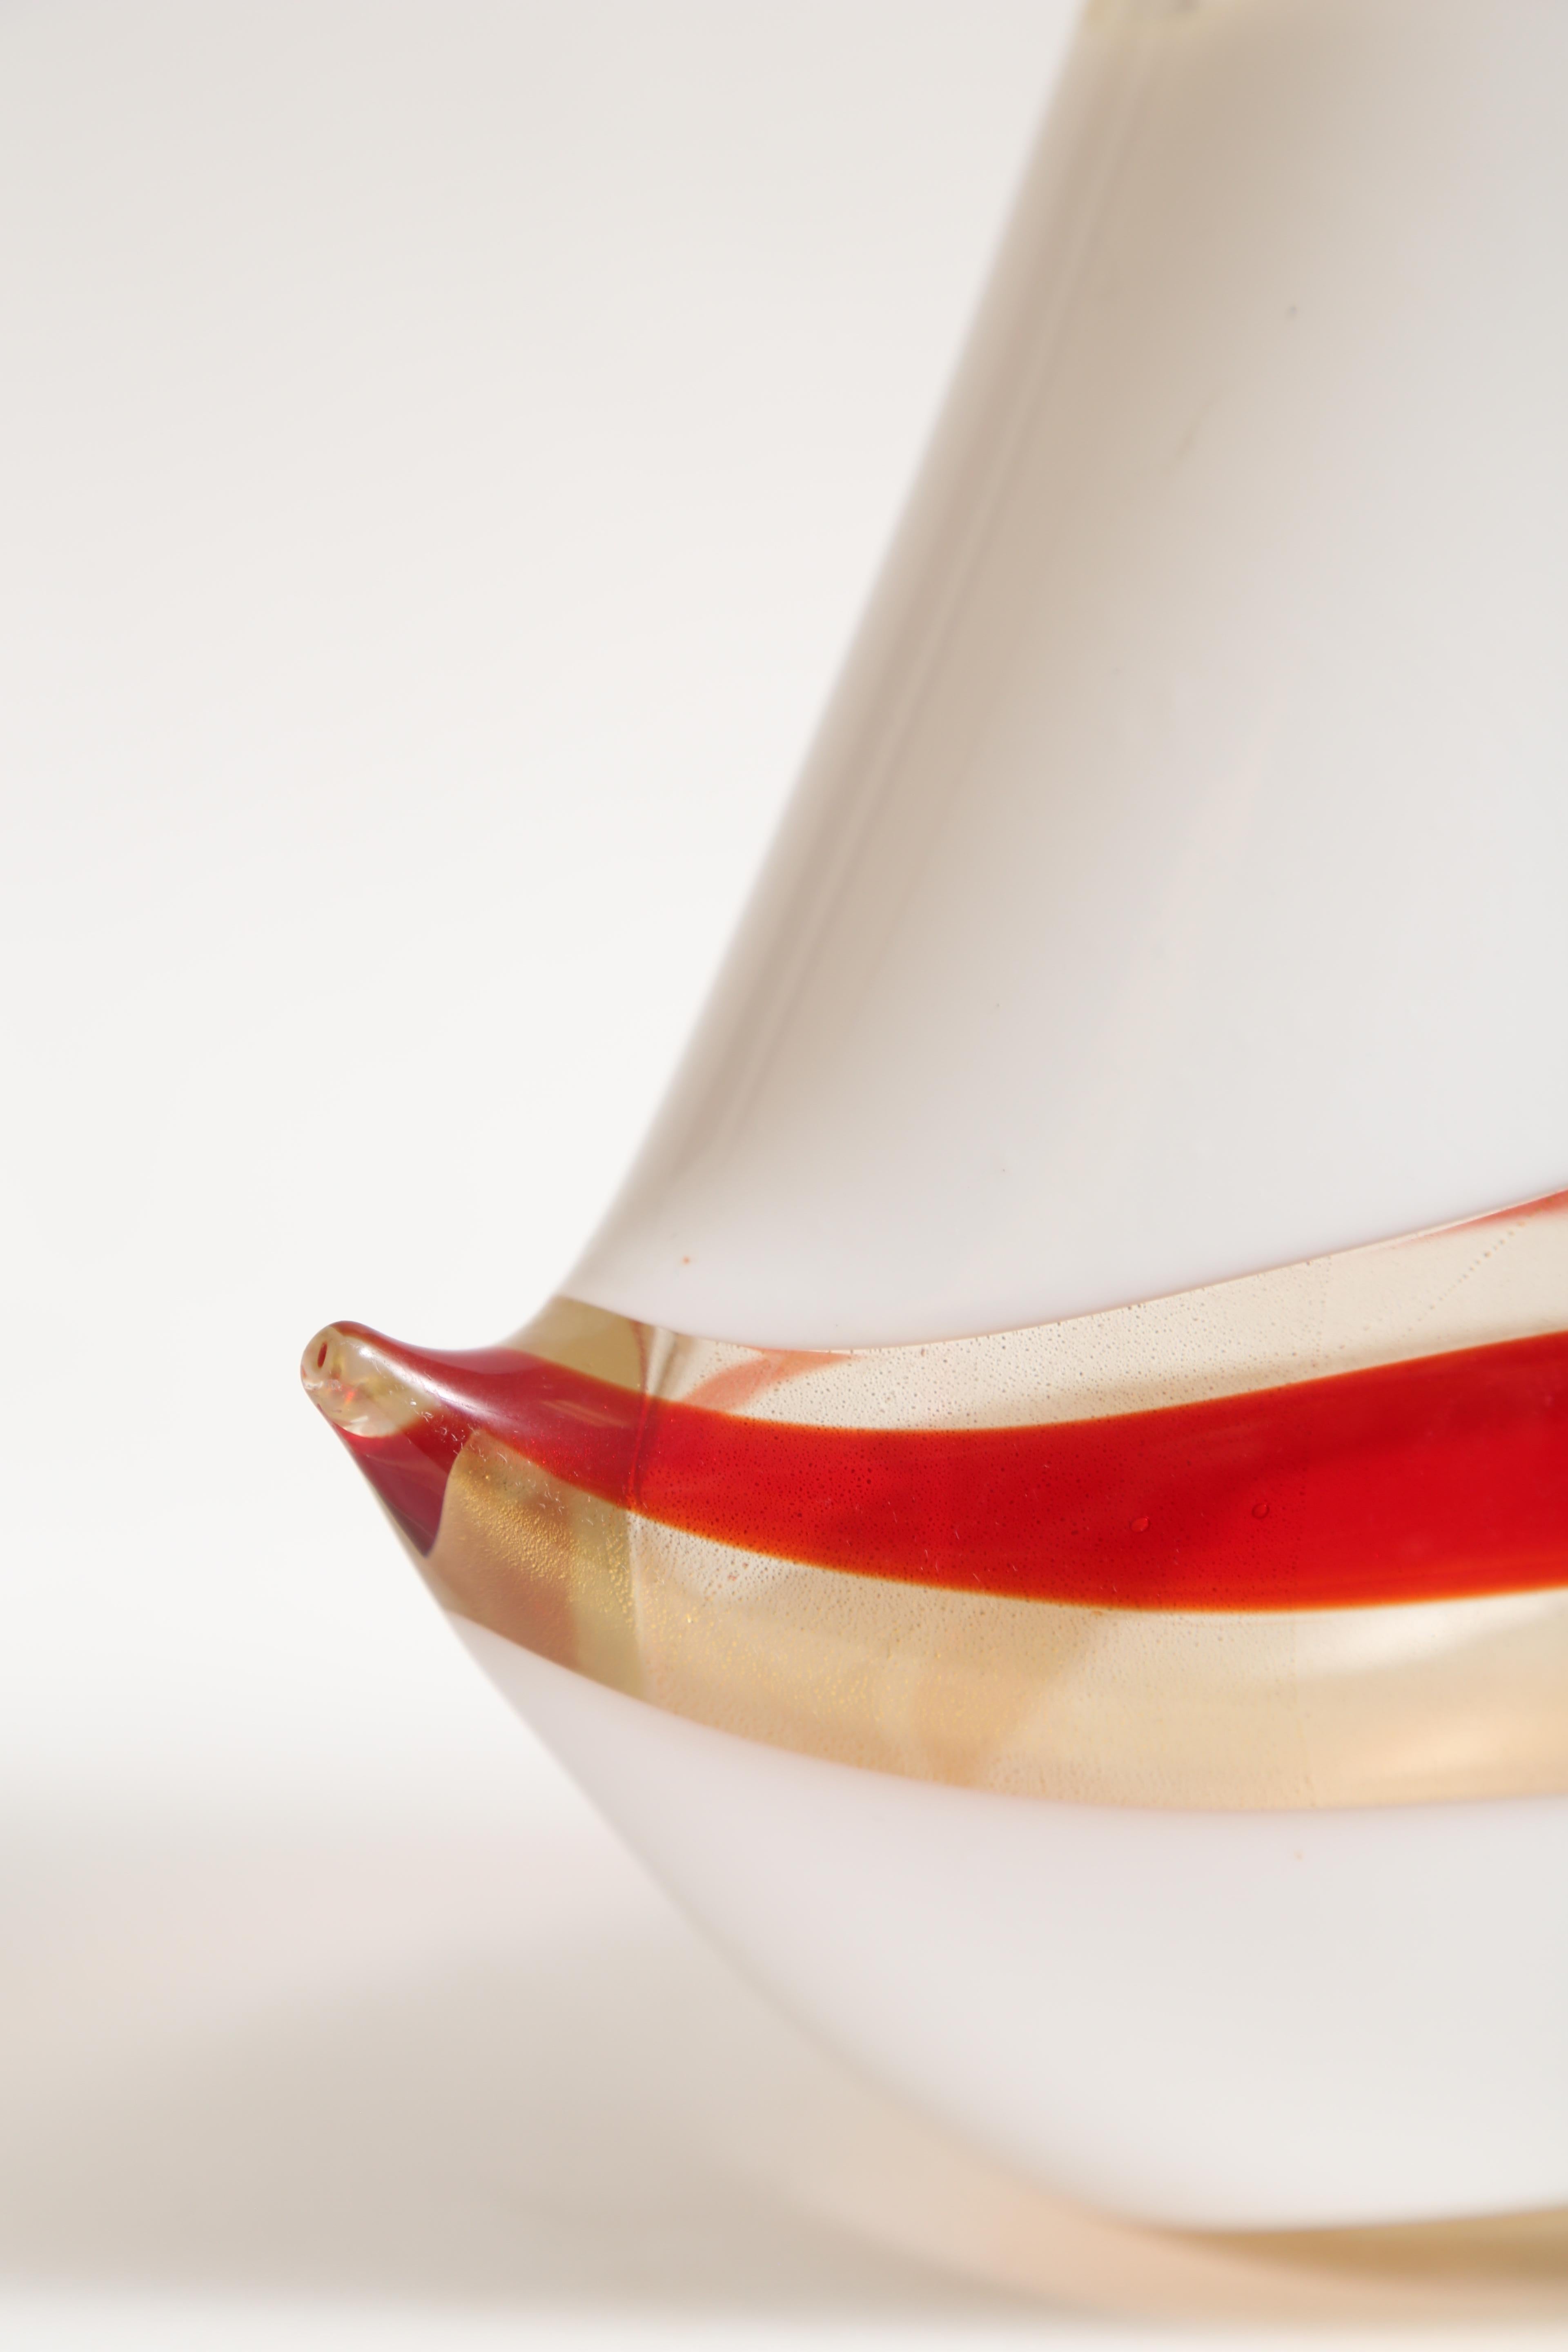 Anzola Fuga Banded Asymmetrical Vase 2